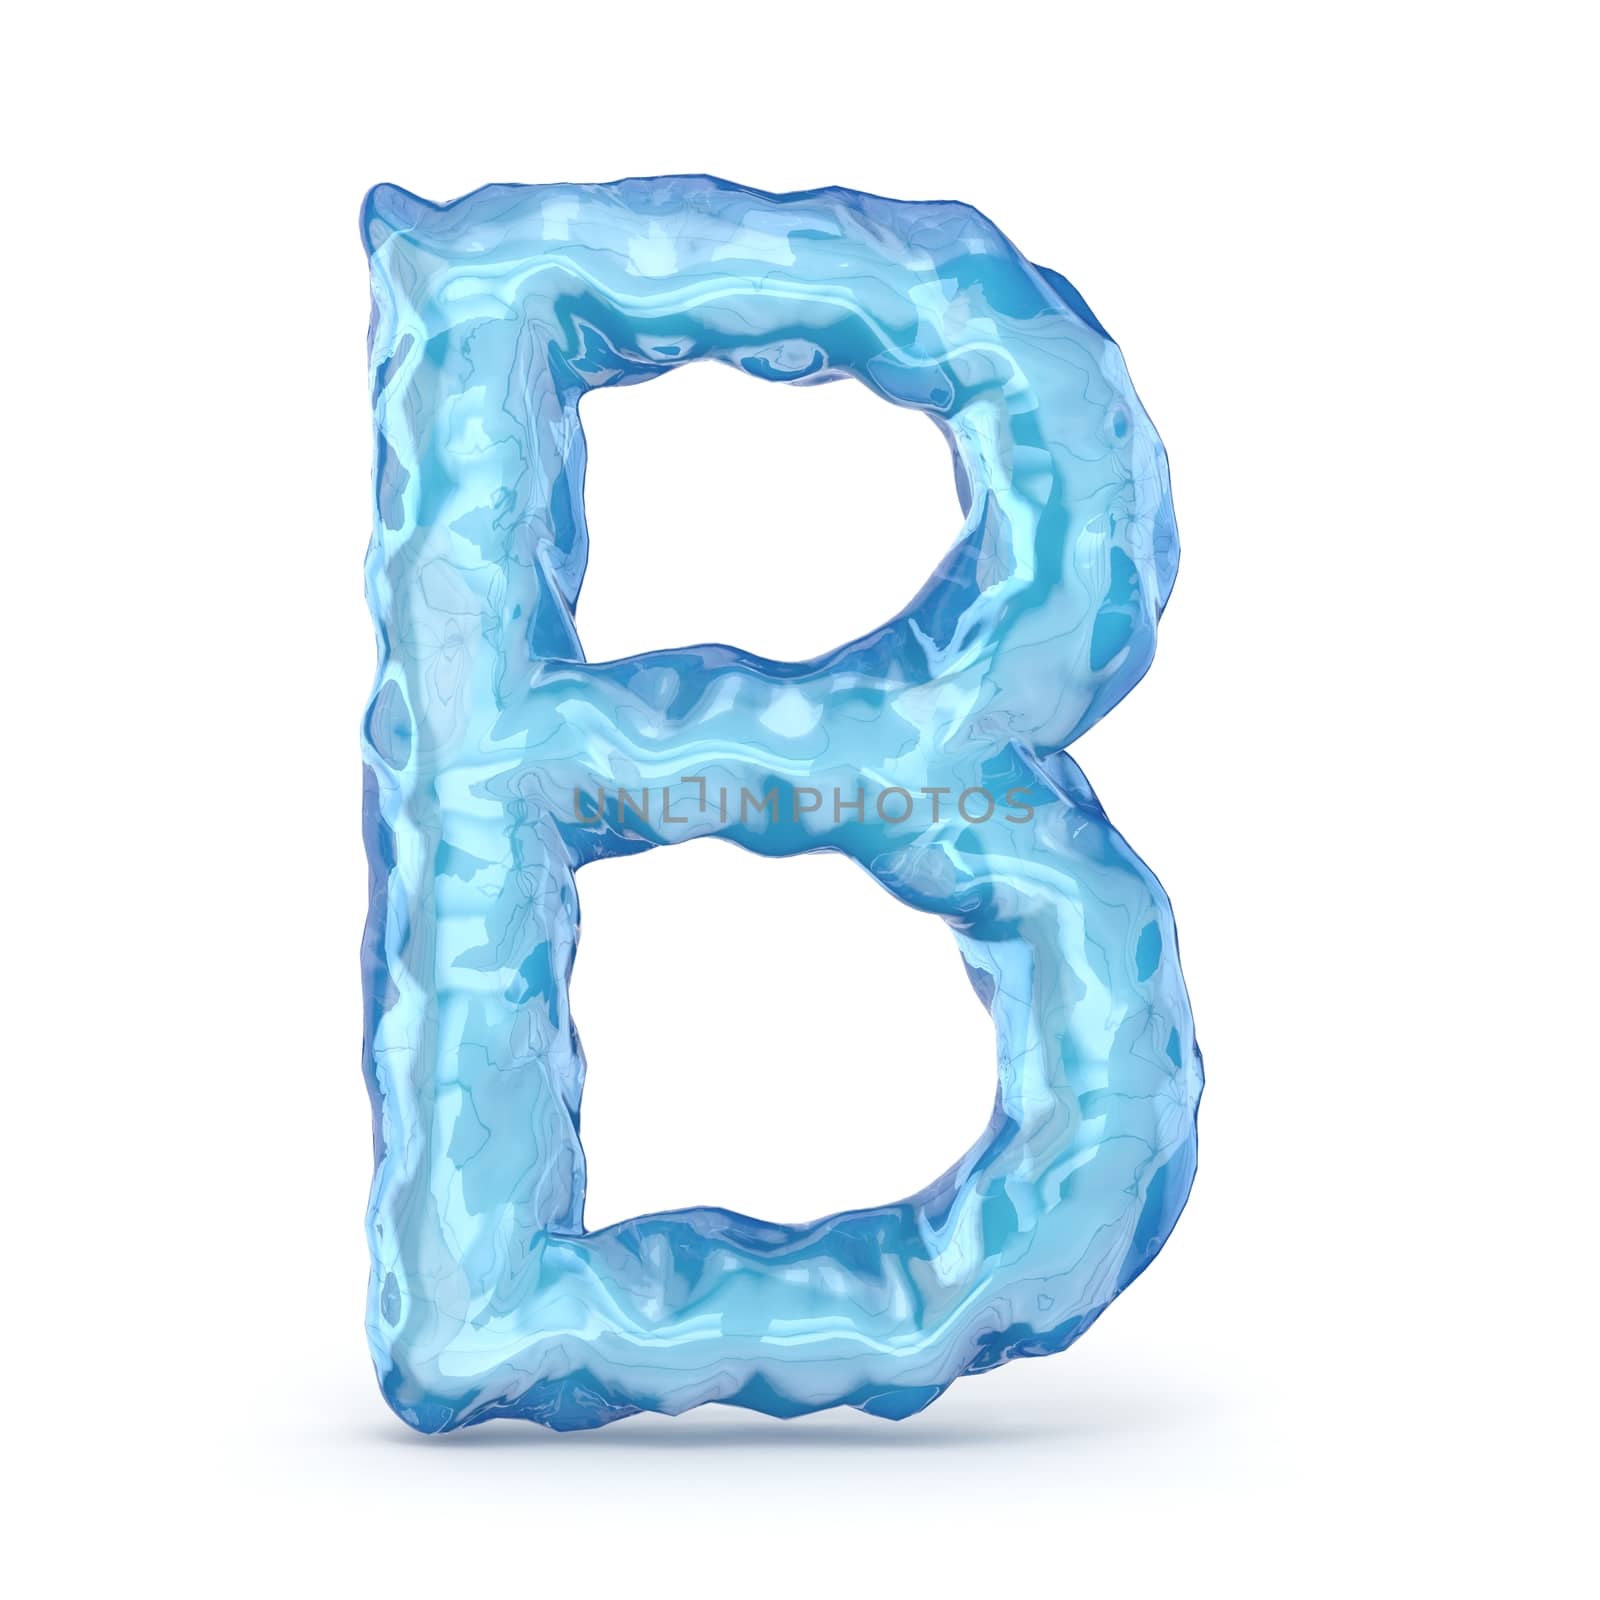 Ice font letter B 3D render illustration isolated on white background